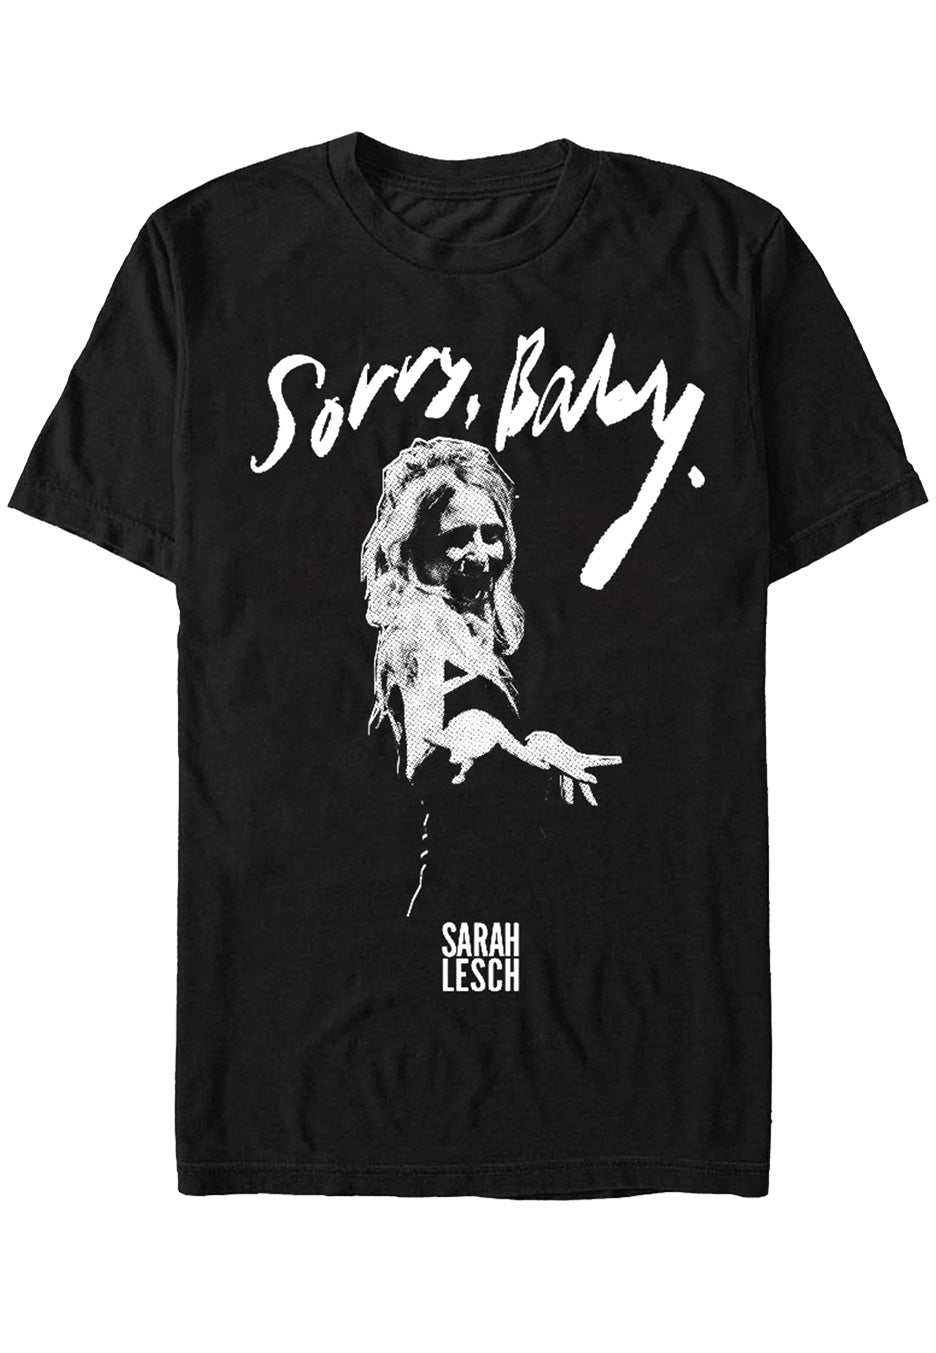 Sarah Lesch - Sorry, Baby - T-Shirt